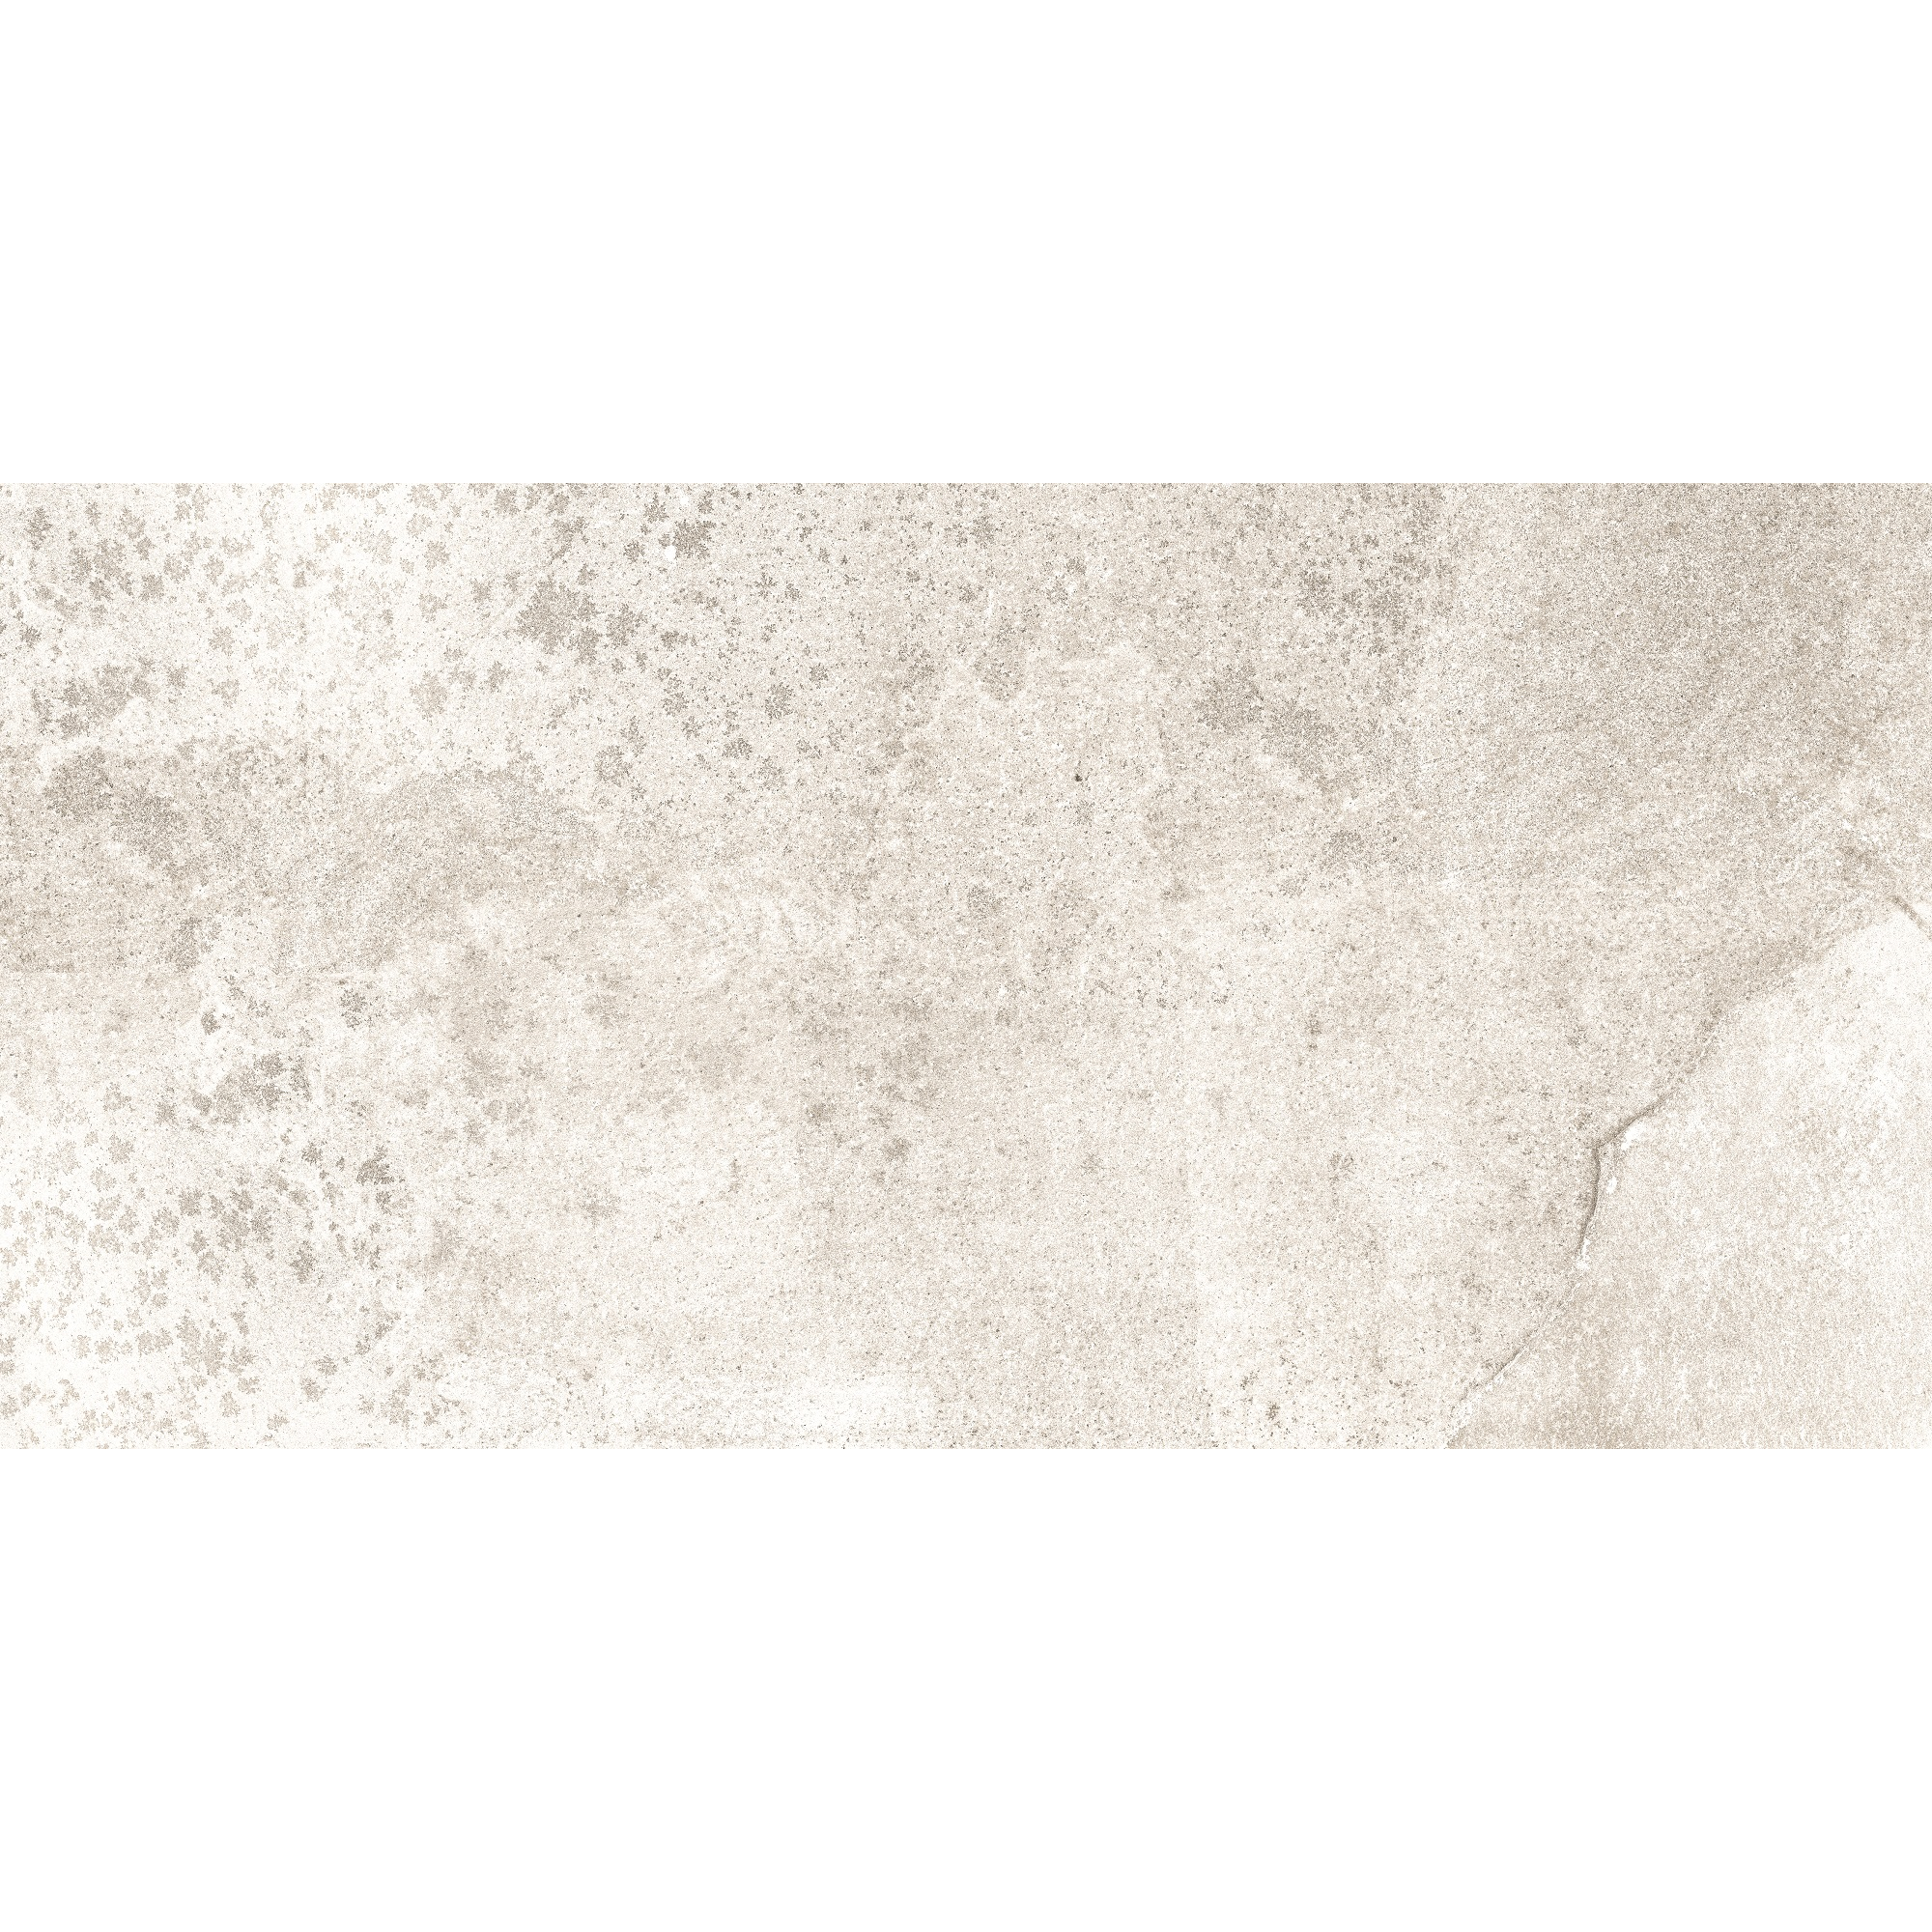 Bodenfliese 'Materia' Feinsteinzeug grau 30 x 60 cm + product picture